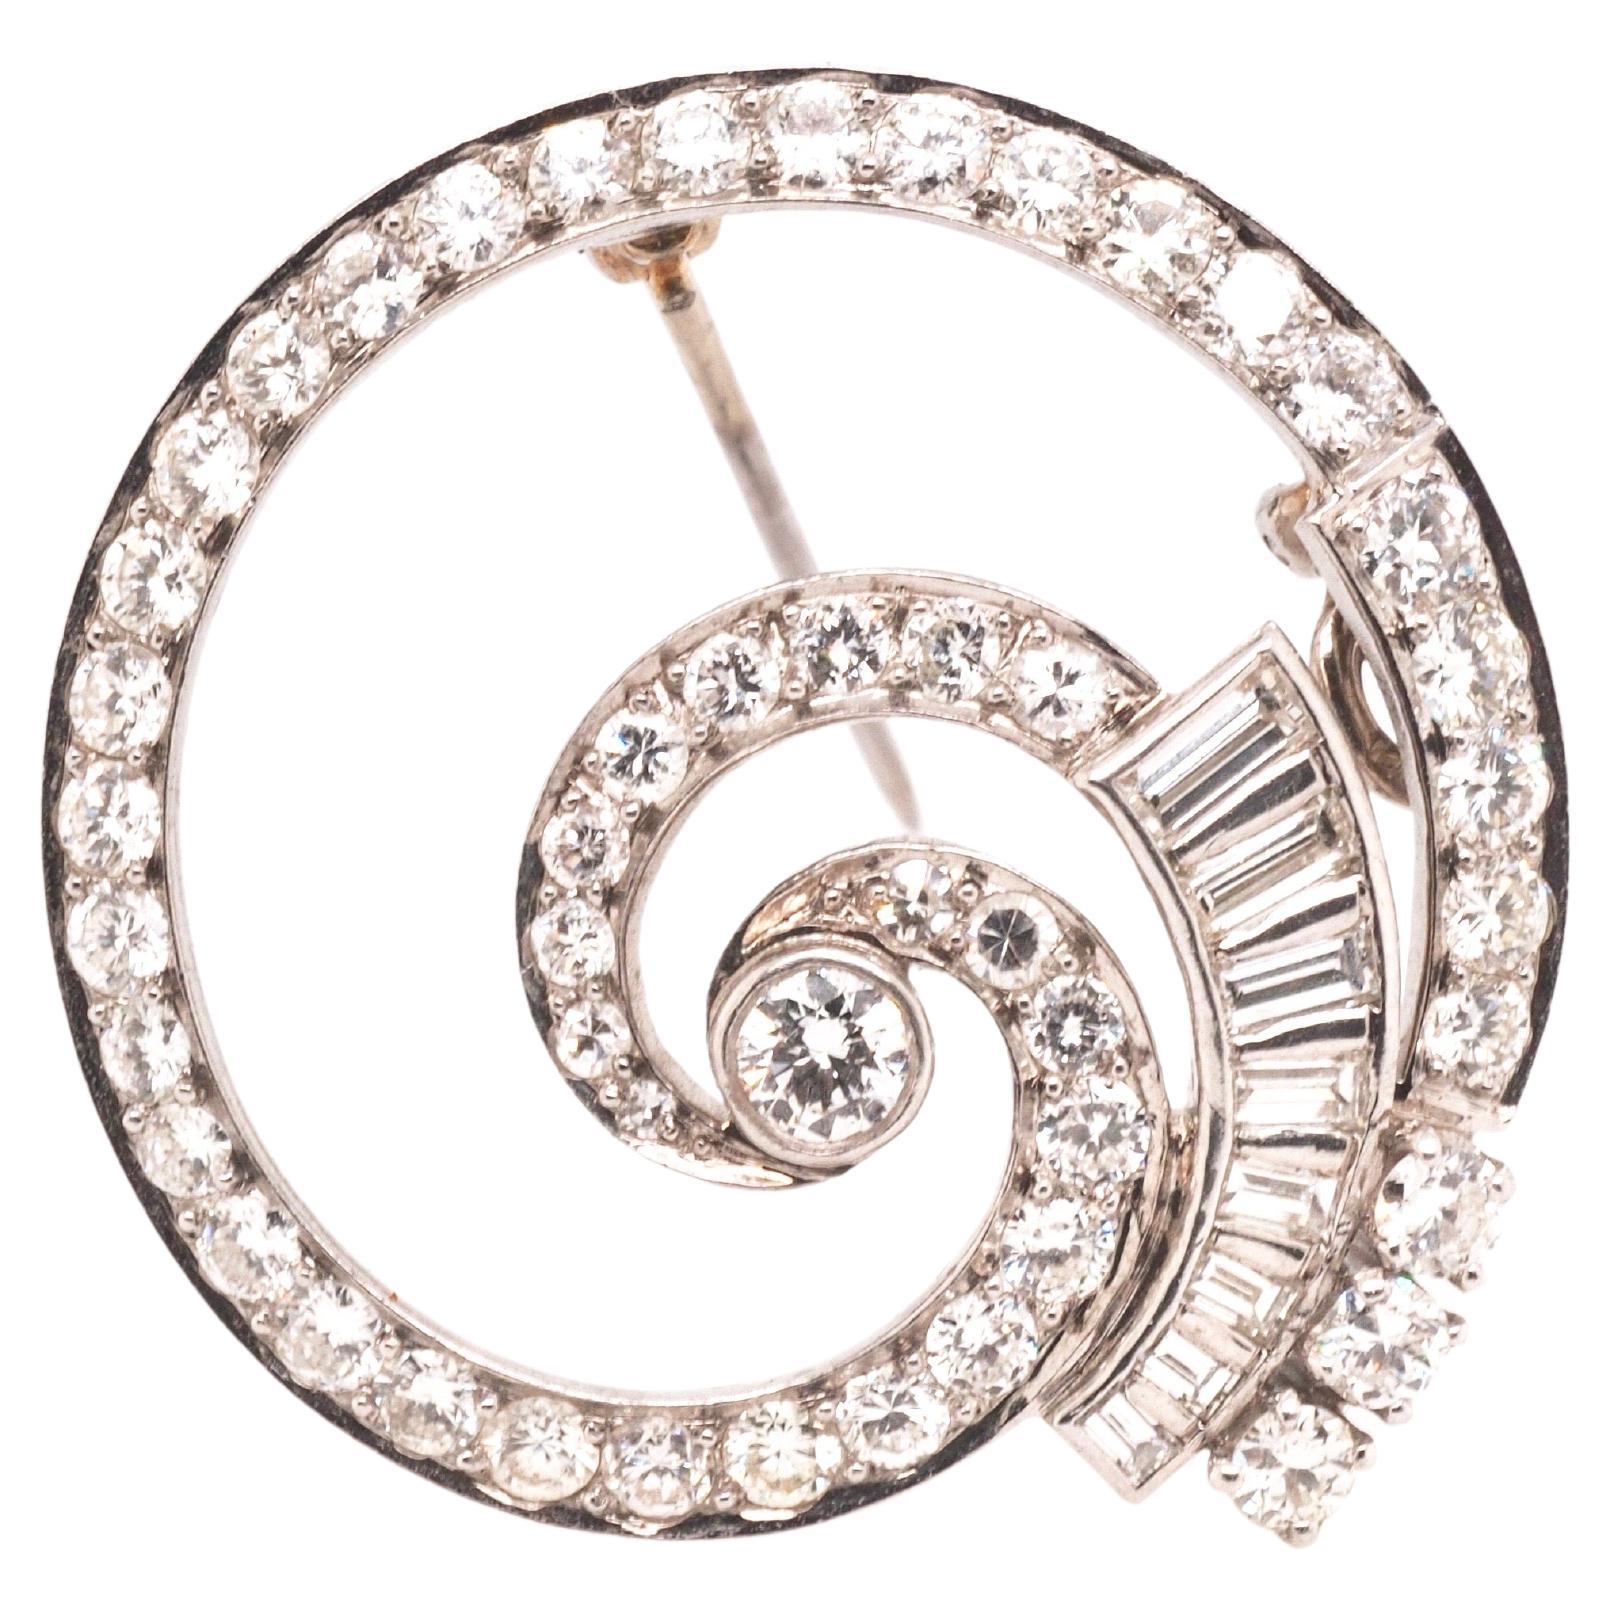 Circa 1940s Platinum Art Deco Diamond Circular Swirl Brooch and Pendant